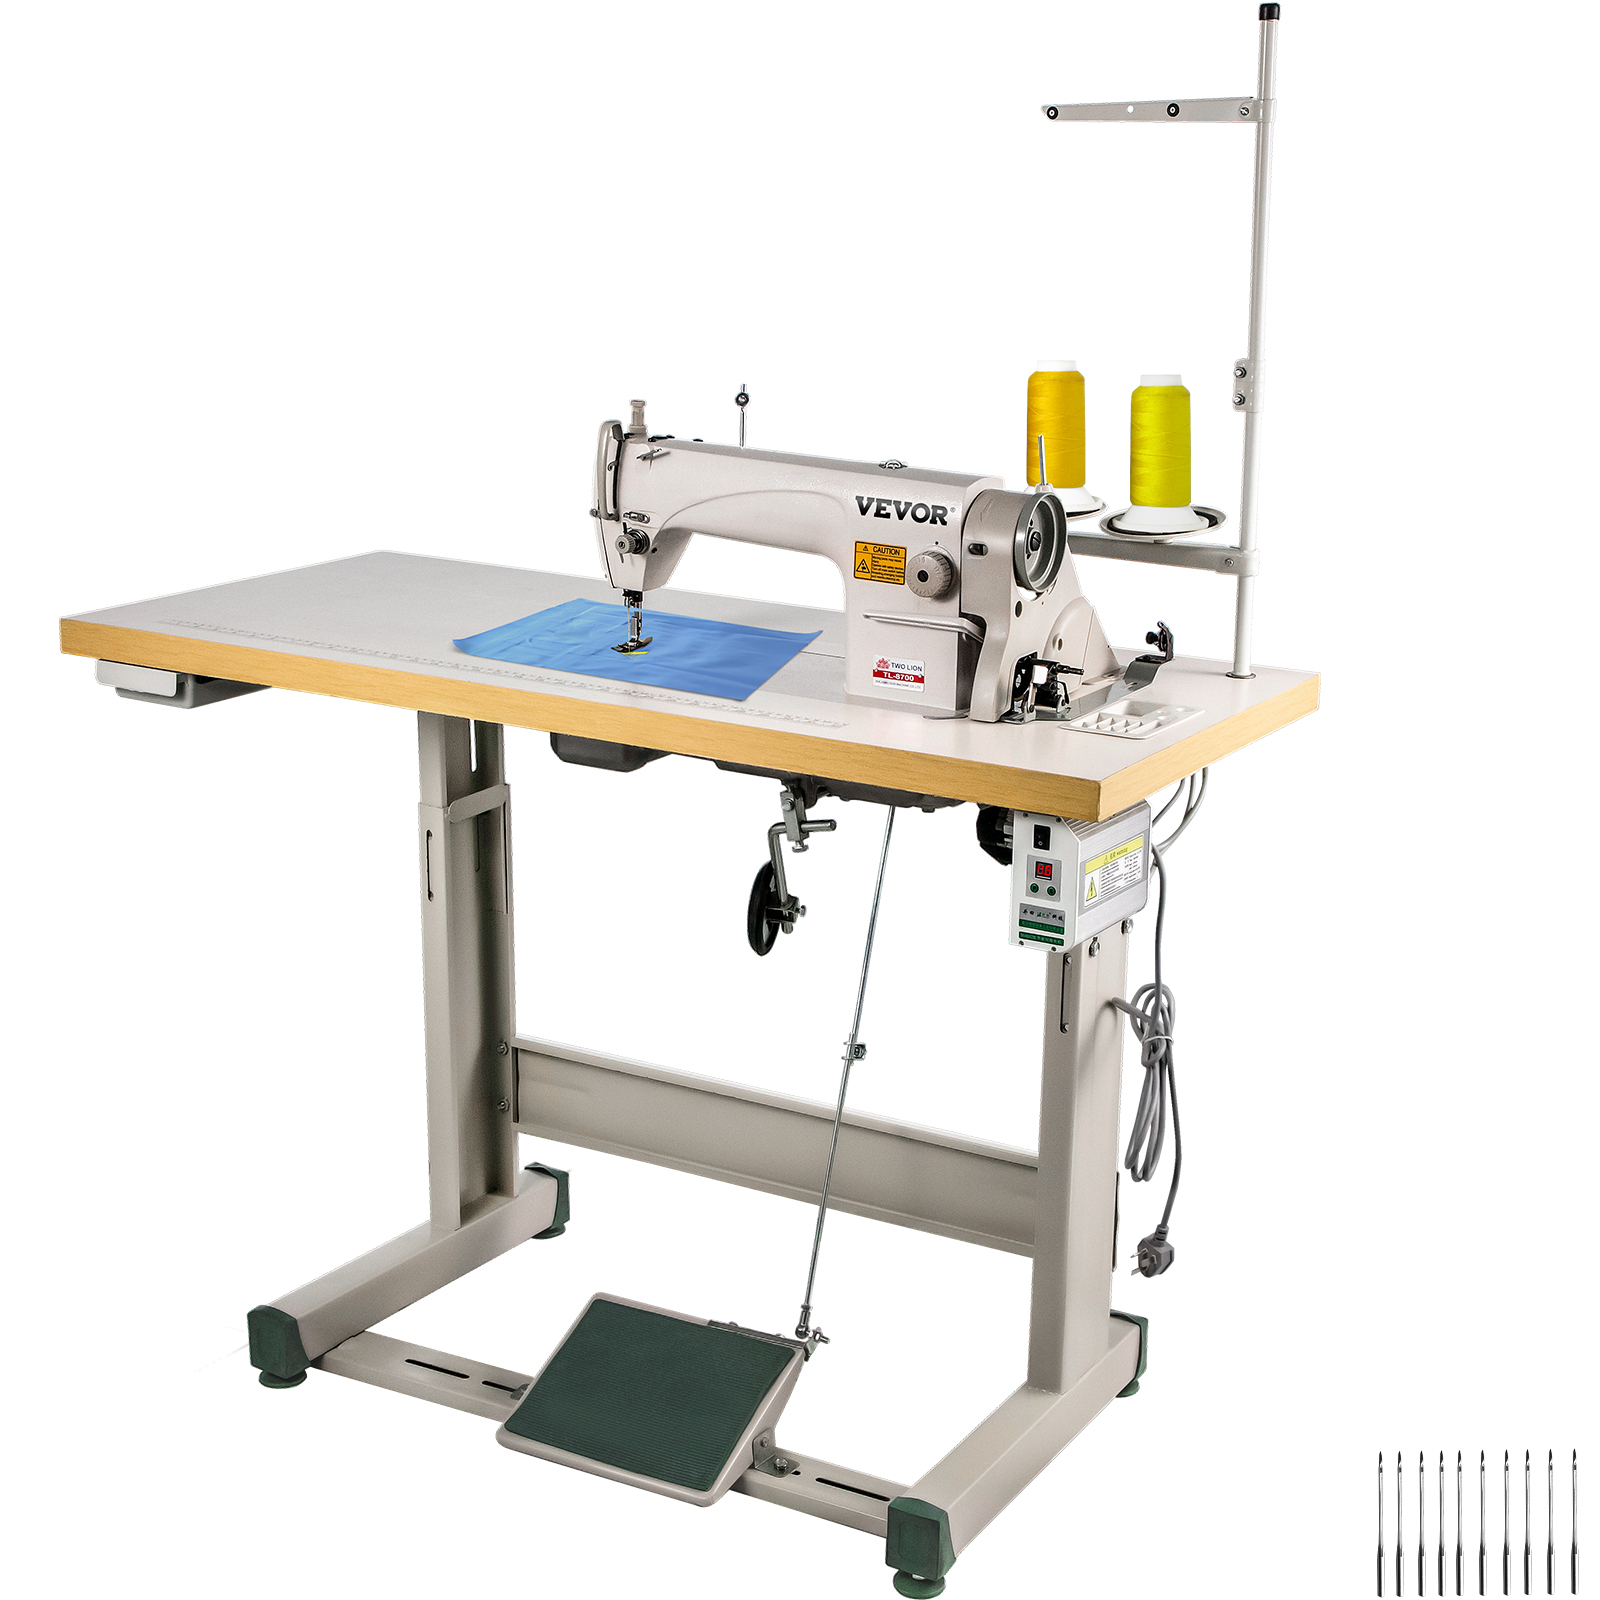 VEVOR Industrial Sewing Machine DDL8700 Lockstitch Sewing Machine with Servo Motor + Table Stand Commercial Grade Sewing Machine for Sewing - image 1 of 9